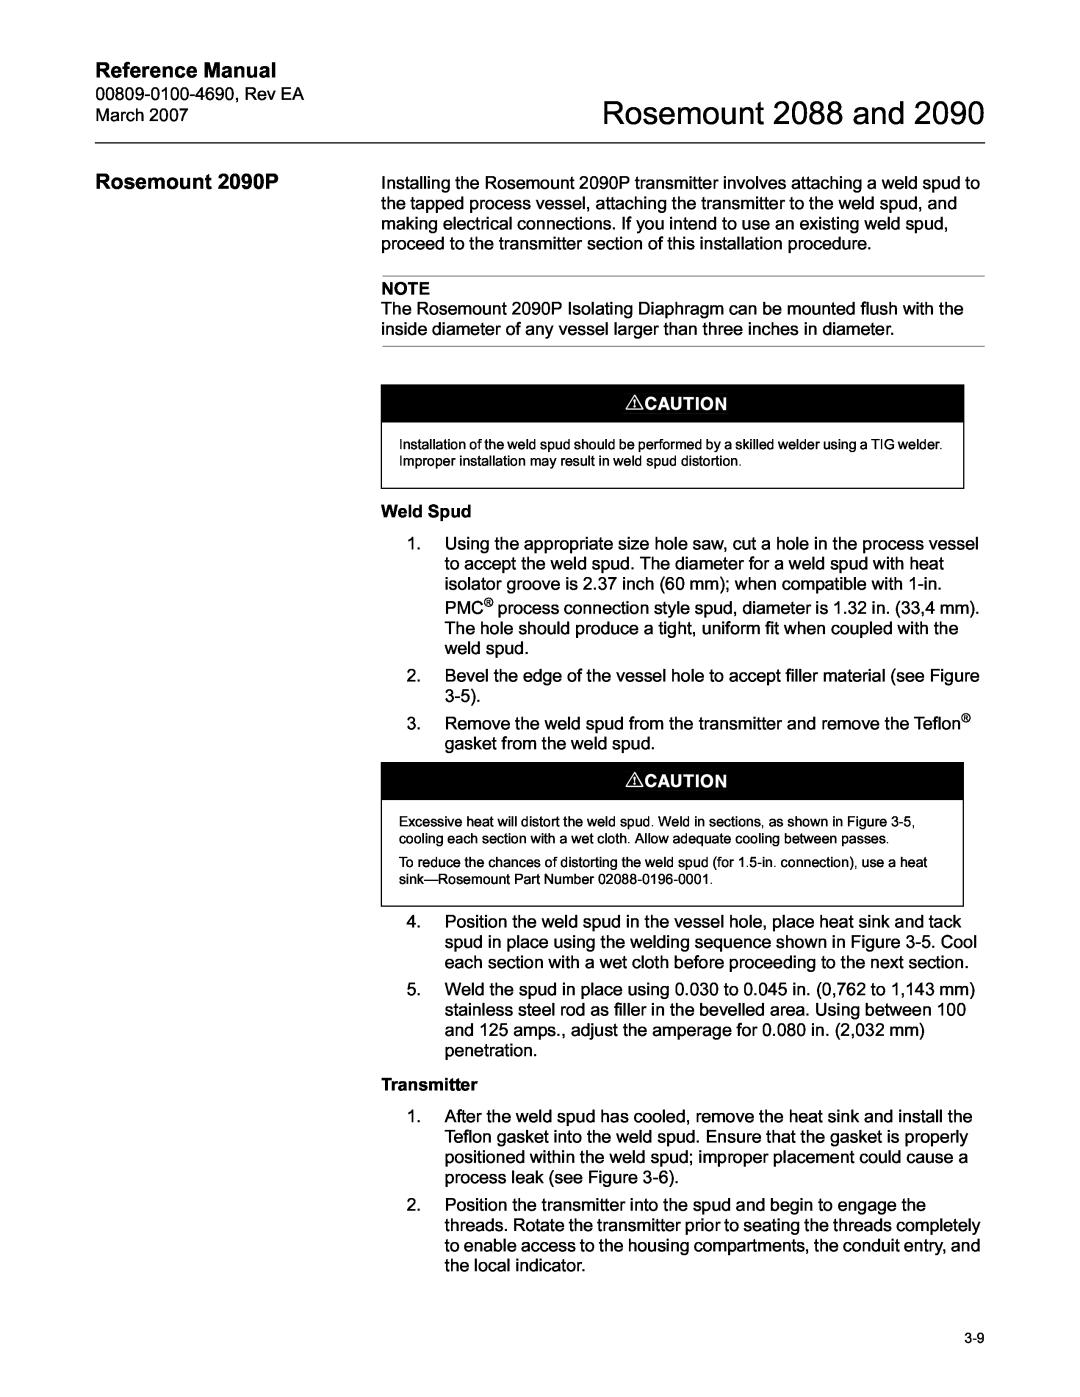 Emerson Process Management manual Rosemount 2090P, Rosemount 2088 and, Reference Manual 